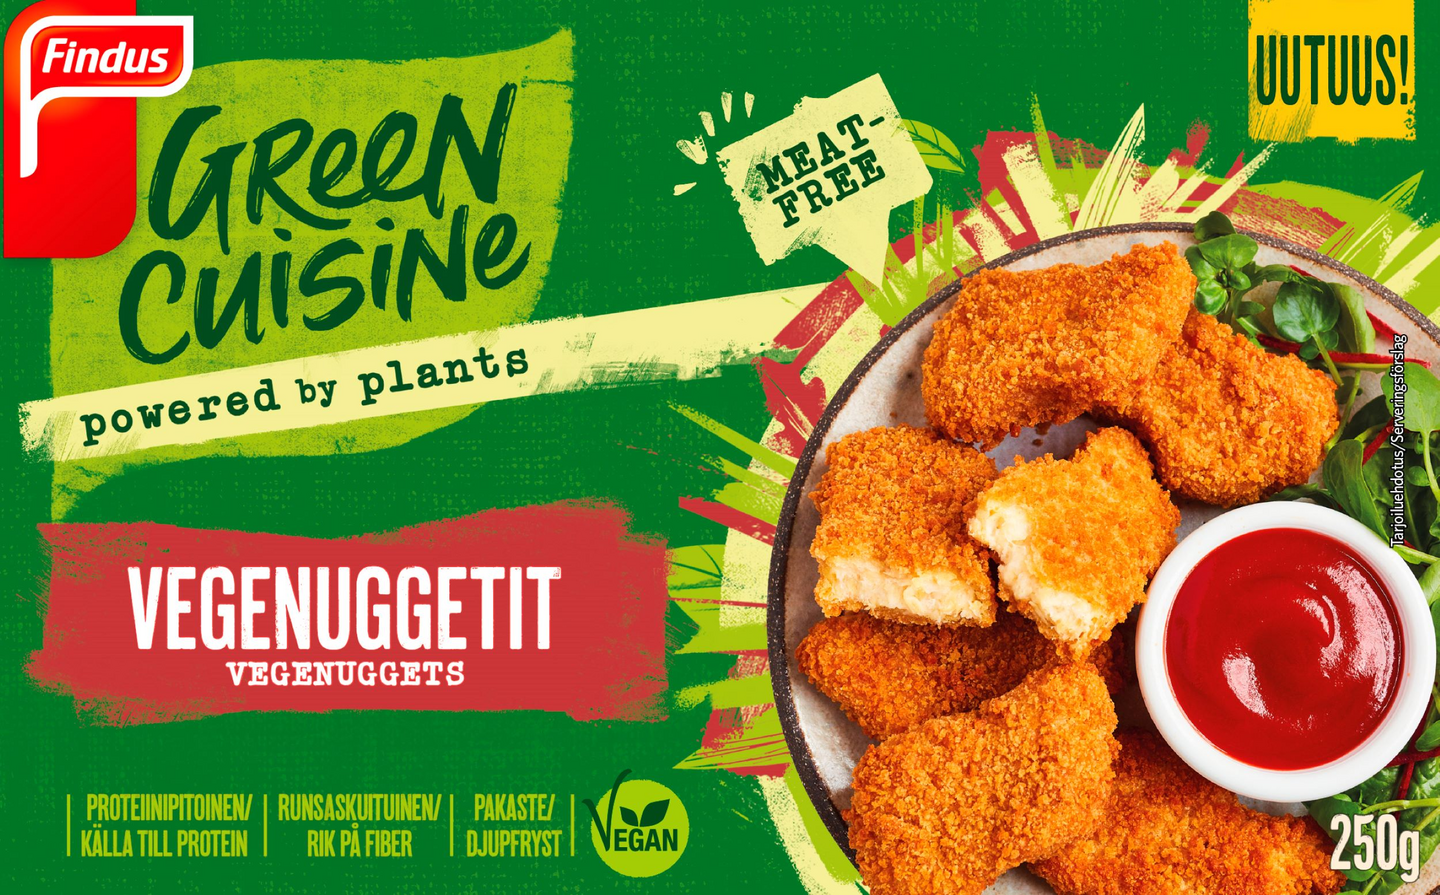 Findus Green Cuisine vegenuggetit 250g pakaste